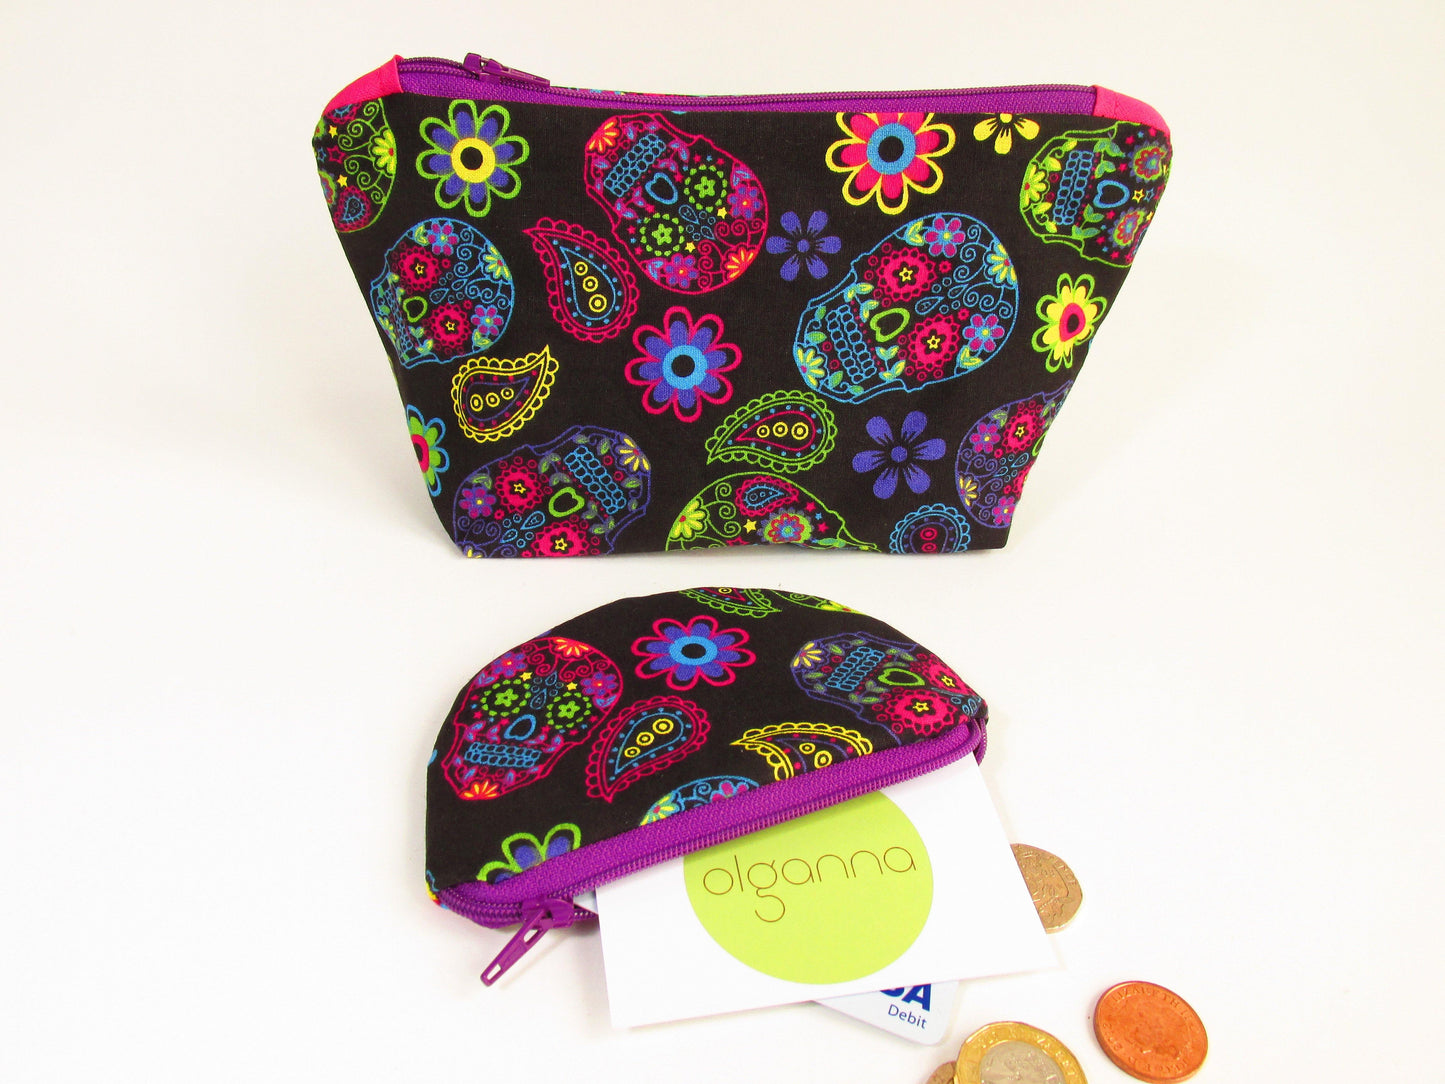 Sugar Skull Gift Set featuring a make up bag and coin purse, Olganna makes gifting easy! - Olganna